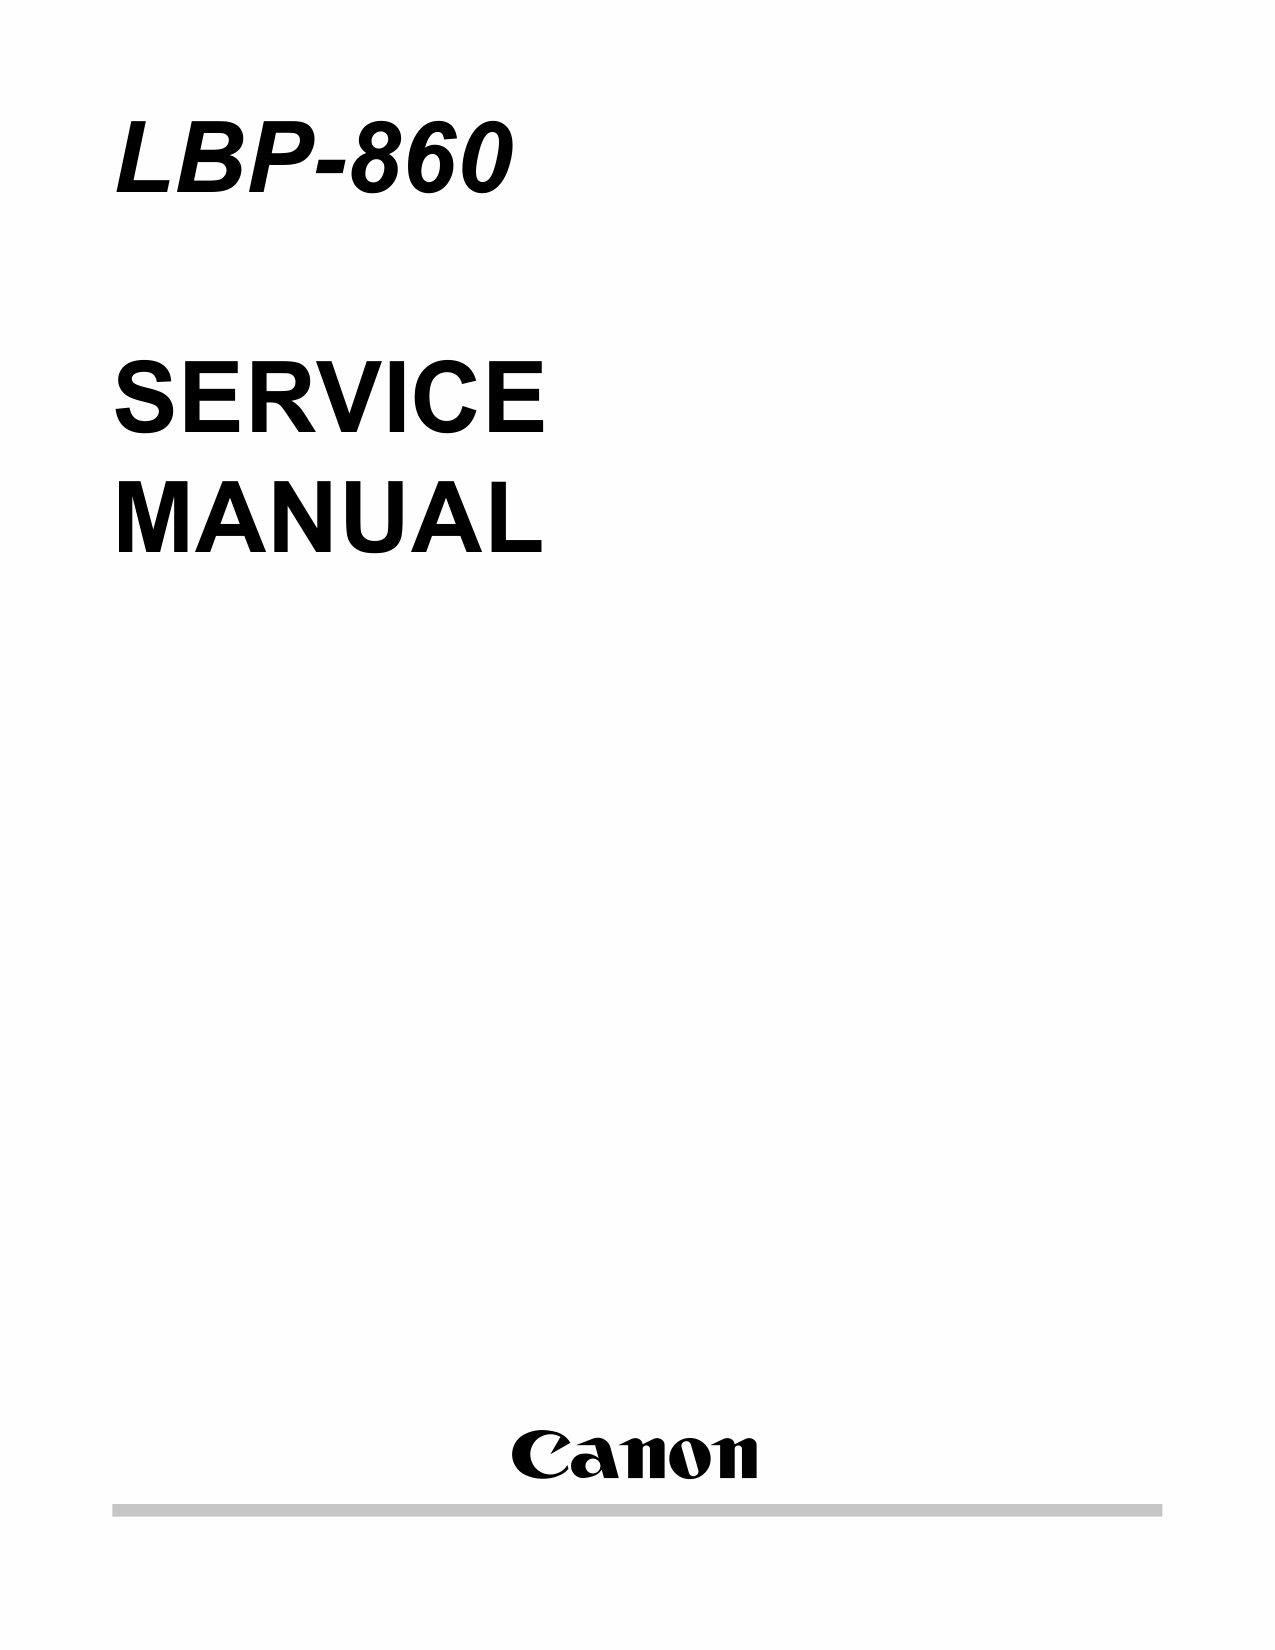 Canon imageCLASS LBP-860 Service Manual-1